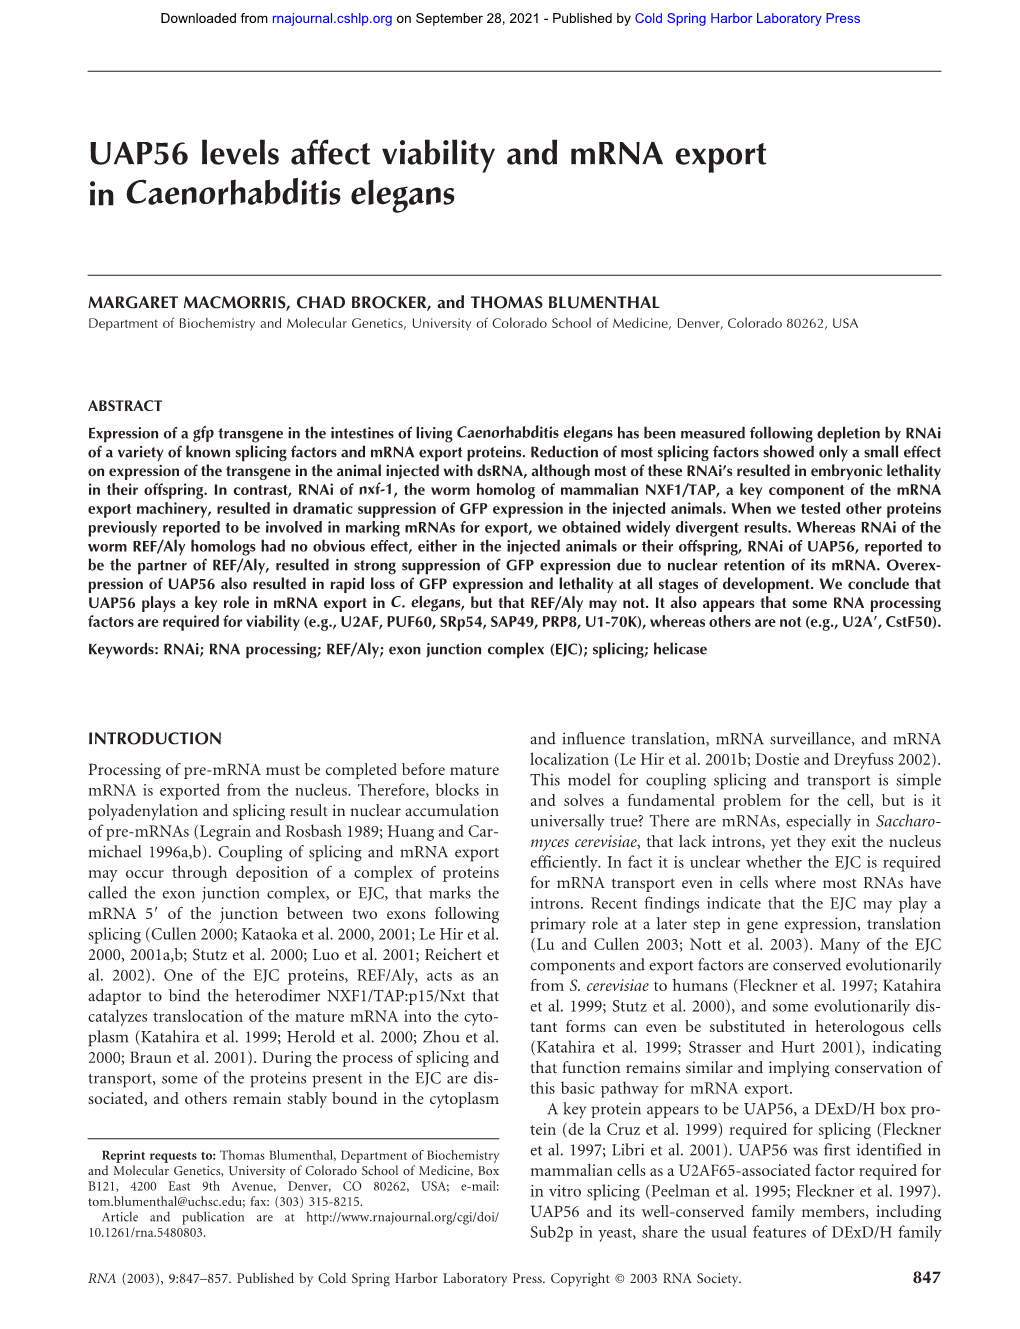 UAP56 Levels Affect Viability and Mrna Export in Caenorhabditis Elegans